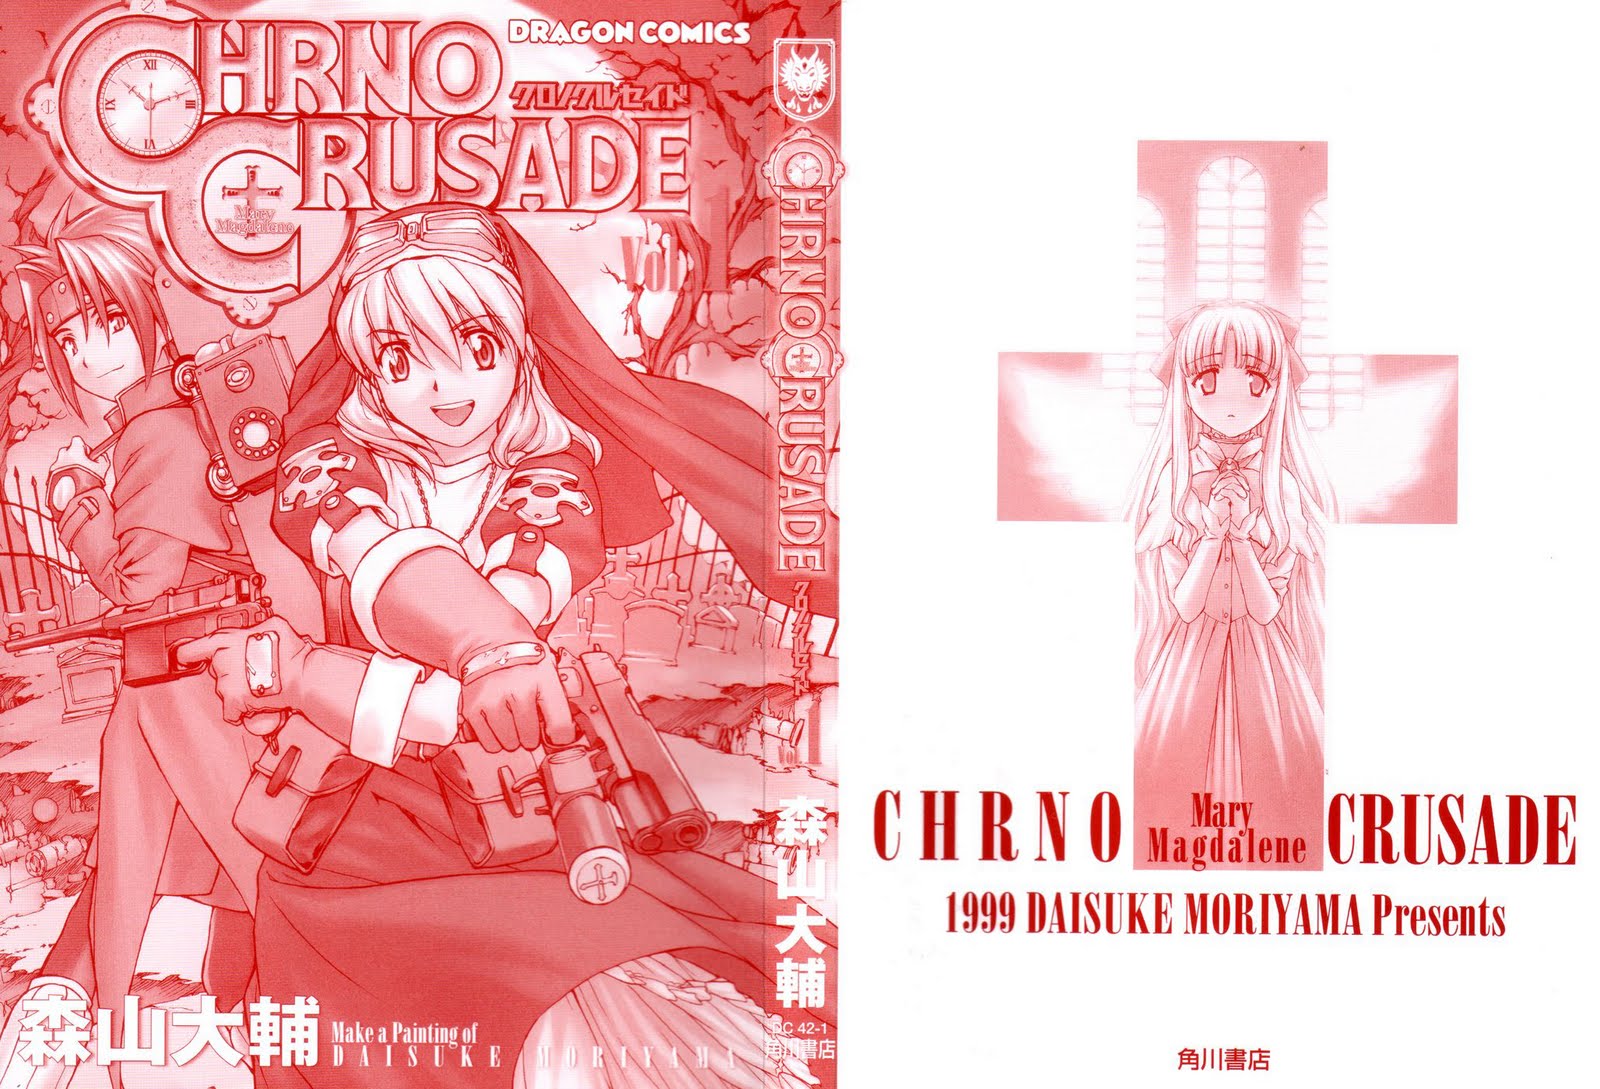 [Manga] Chrono Crusade (Đọc online tại SSF) - Page 2 CHRNO-CRUSADE-01-000-e